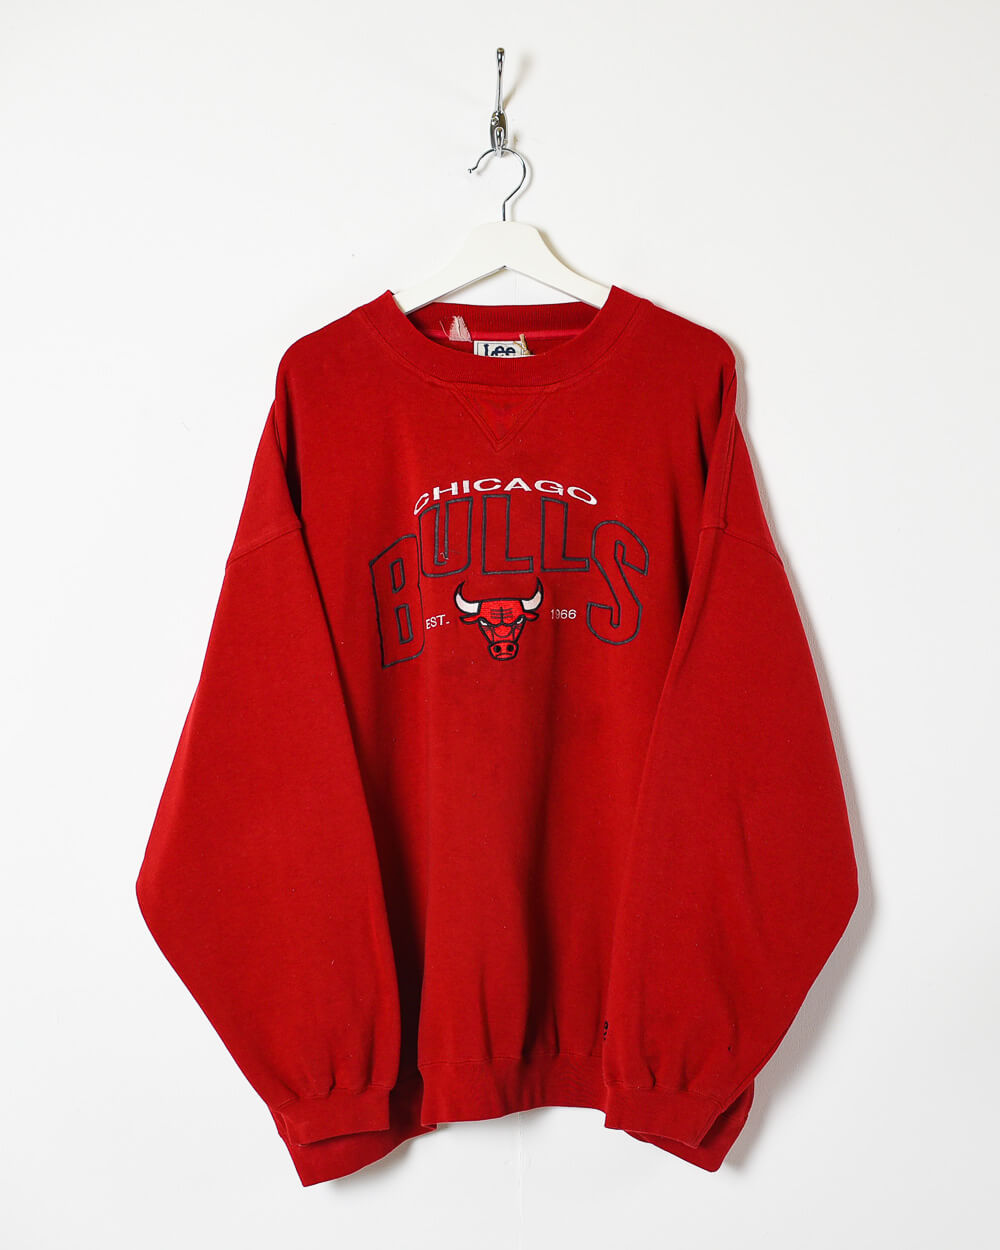 Chicago Bulls Sweatshirt Size XS - second wave vintage store